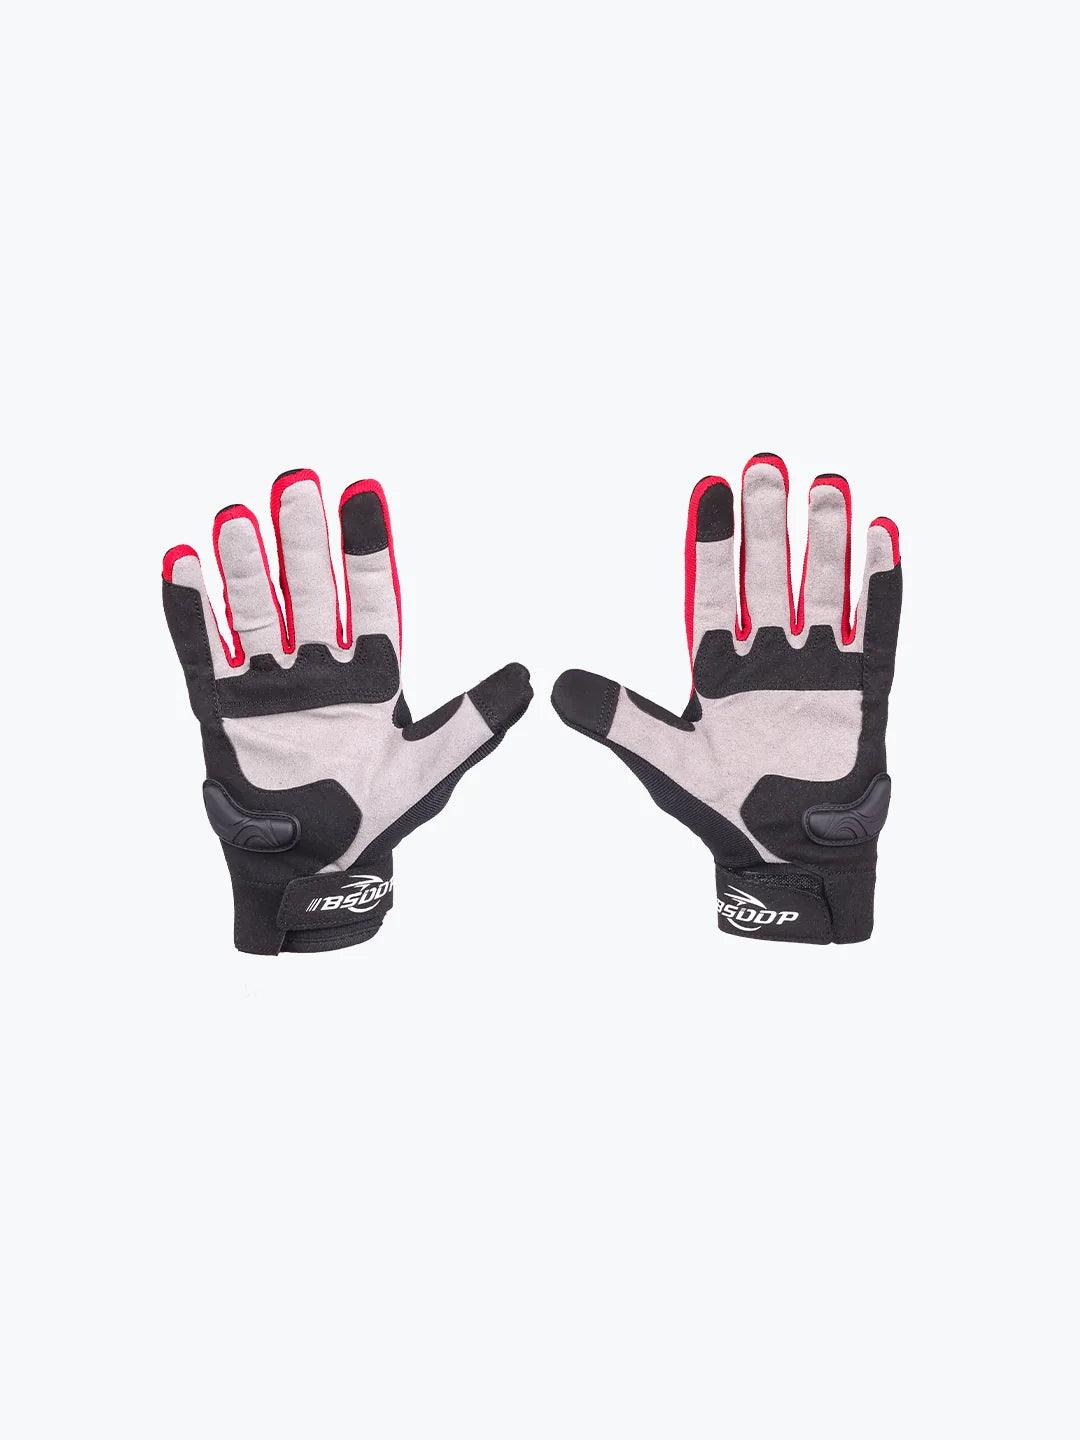 BSDDP Gloves A0143 Black Red - Moto Modz